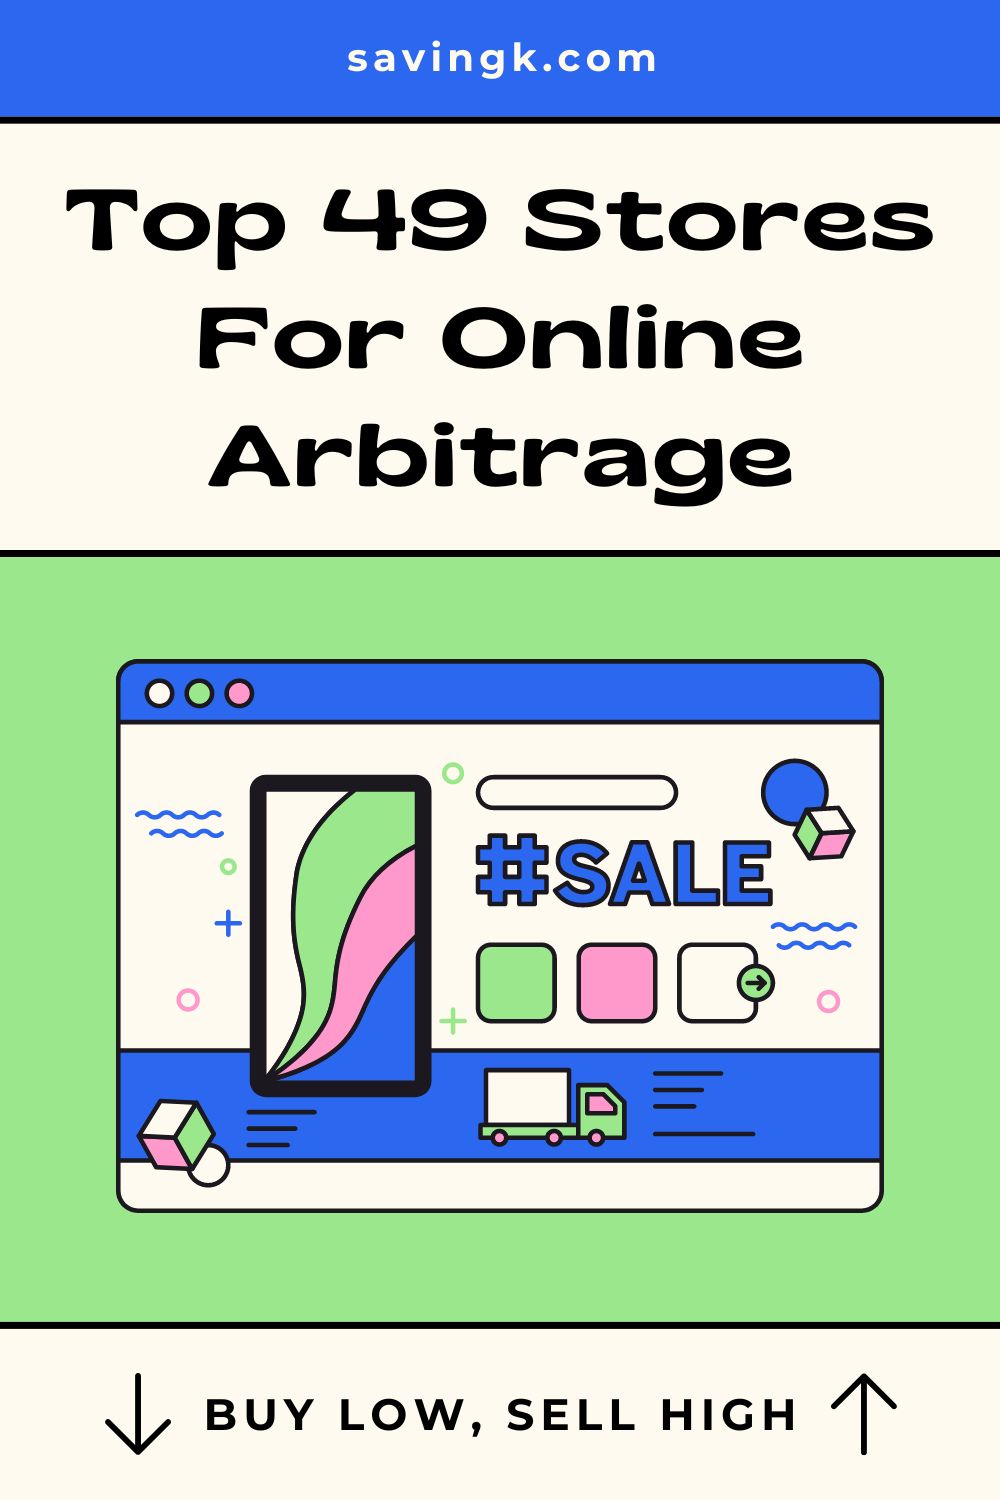 Top 49 Stores For Online Arbitrage